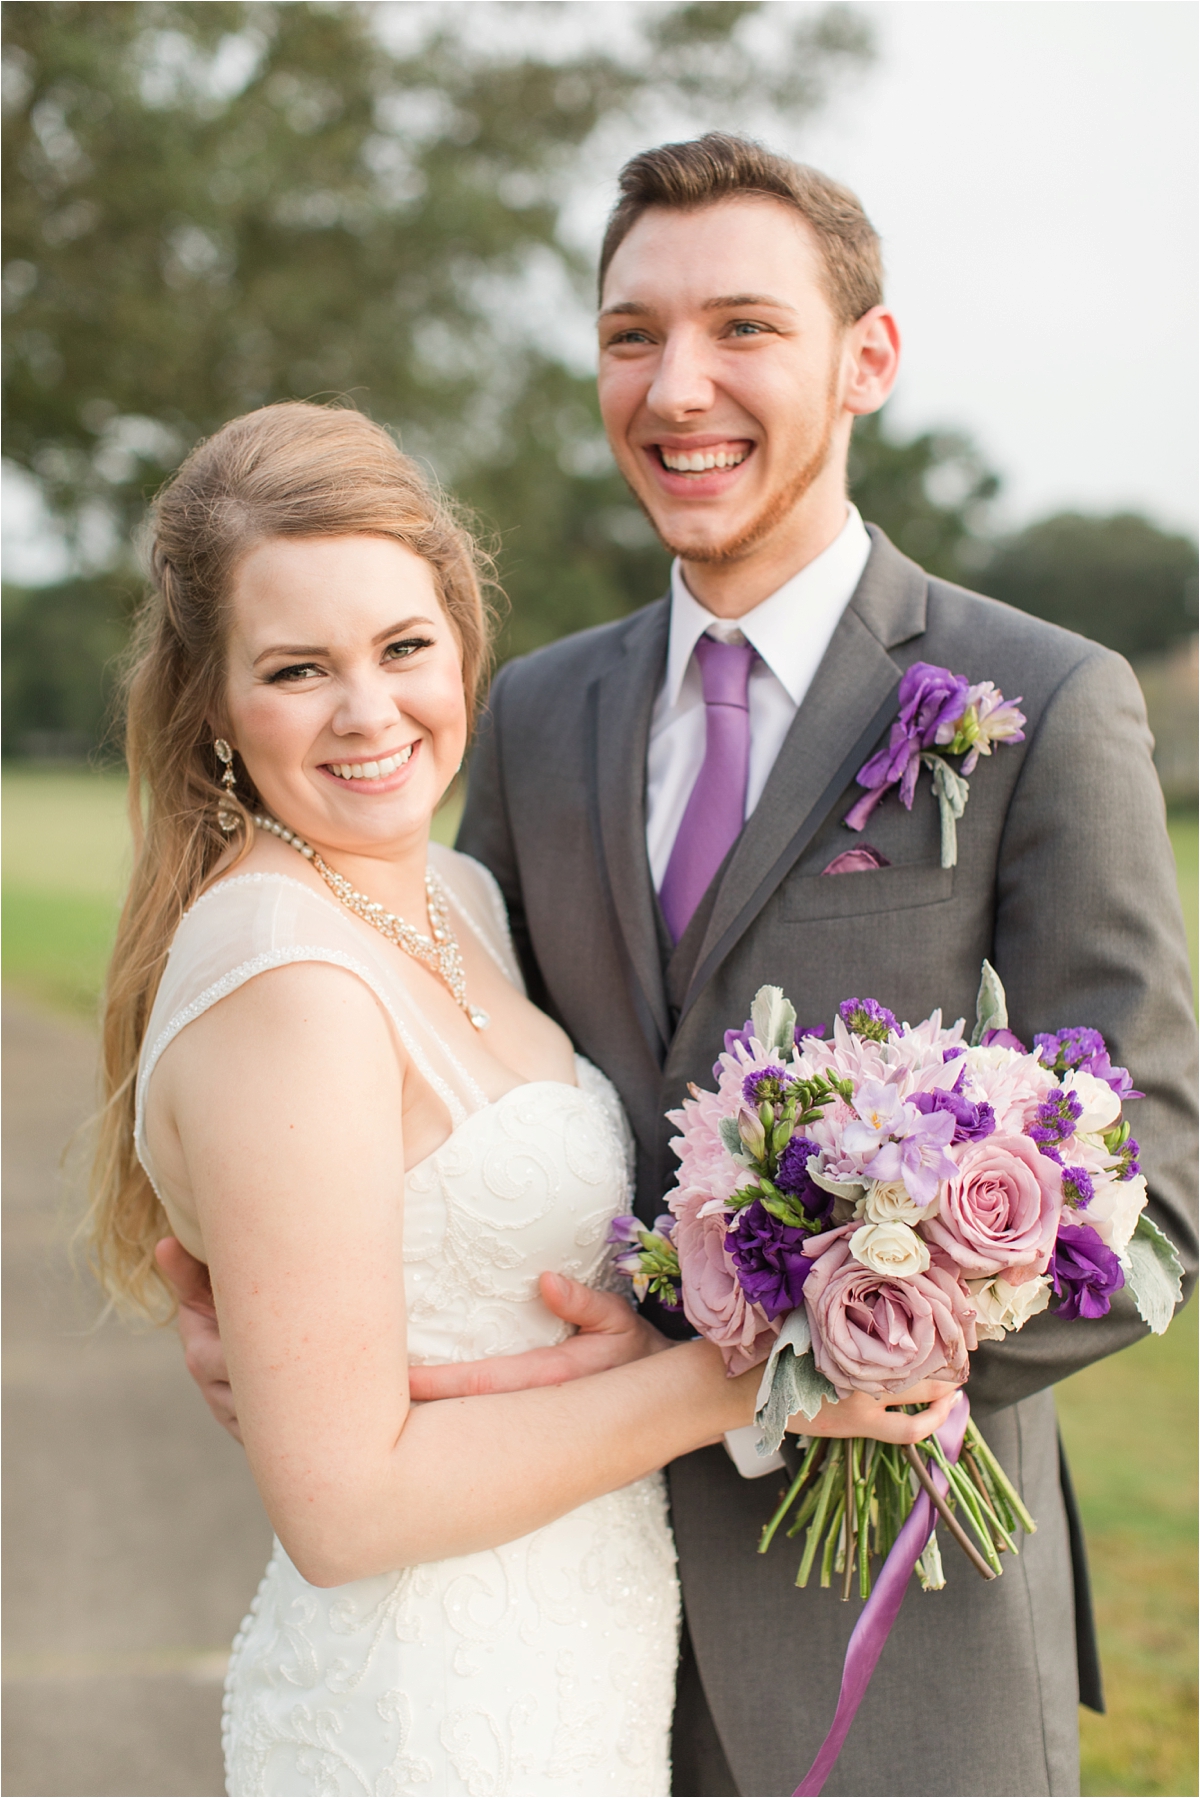 bride-groom-portraits-photos-chunky-jewelry-lavender-bouquet-alabama-wedding-photographer